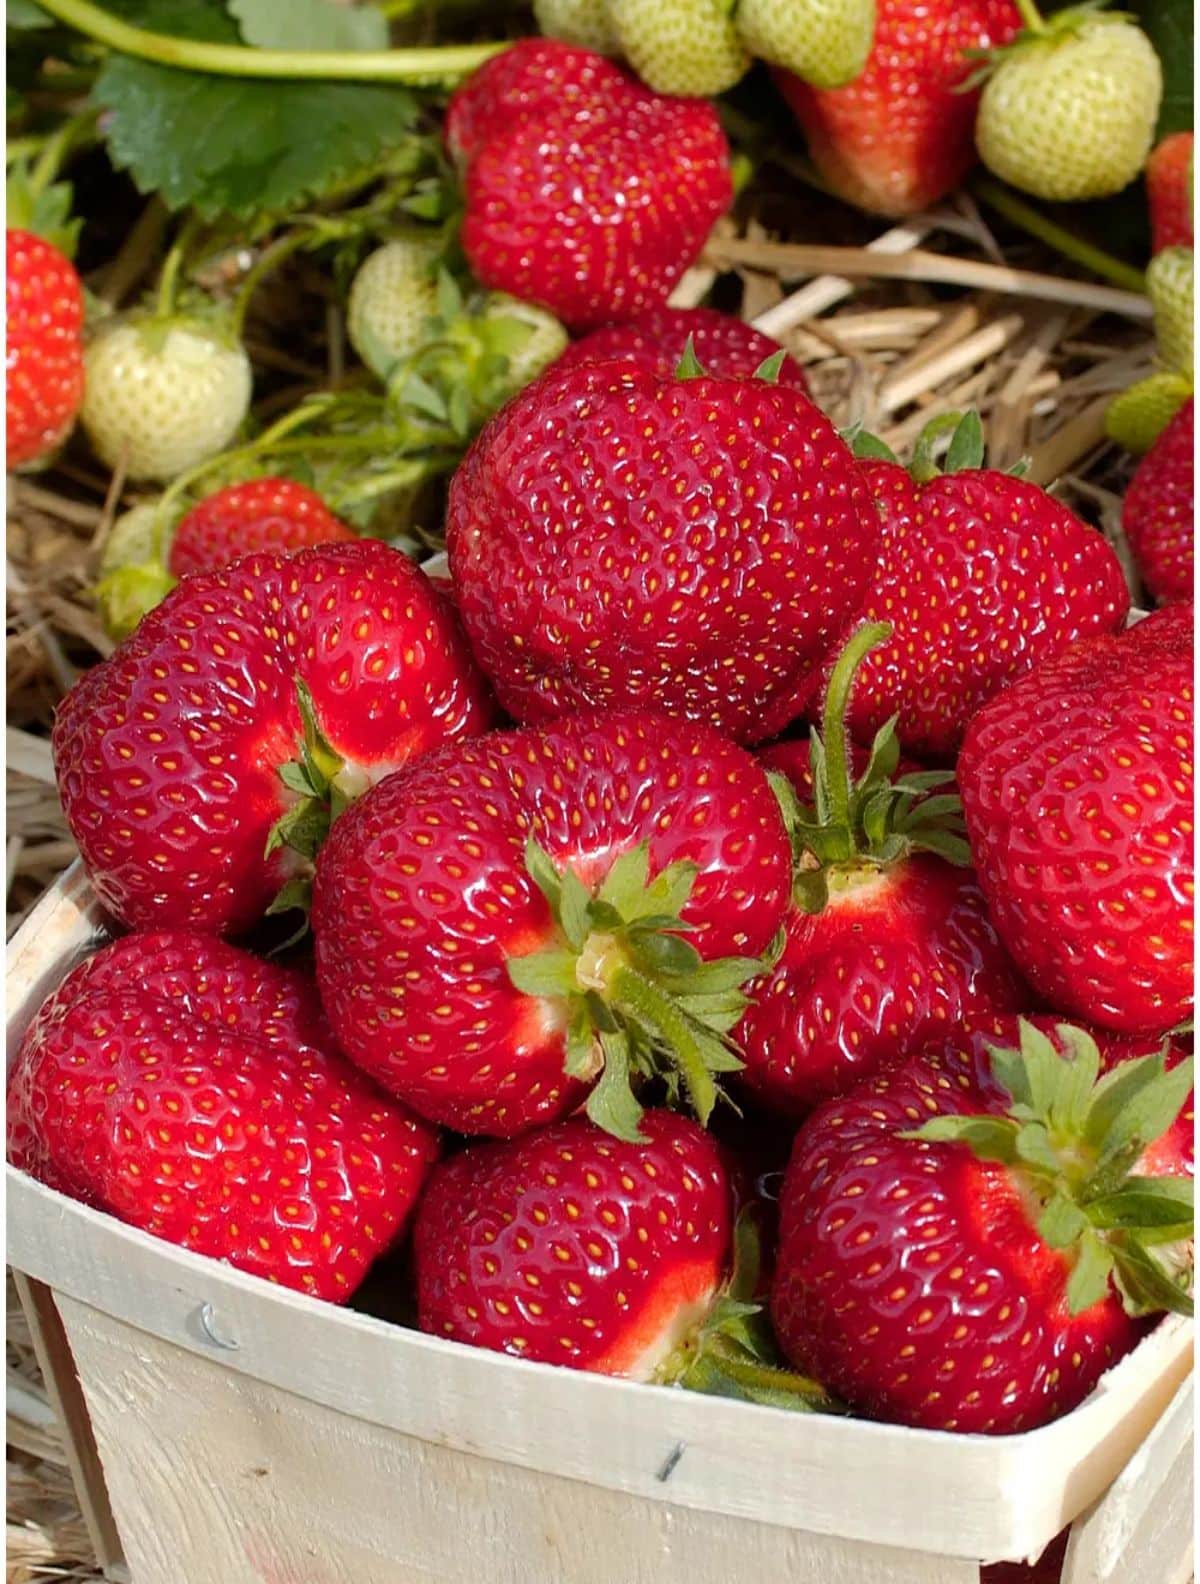 Basket full of freshly picked ripe honeoye strawberries.